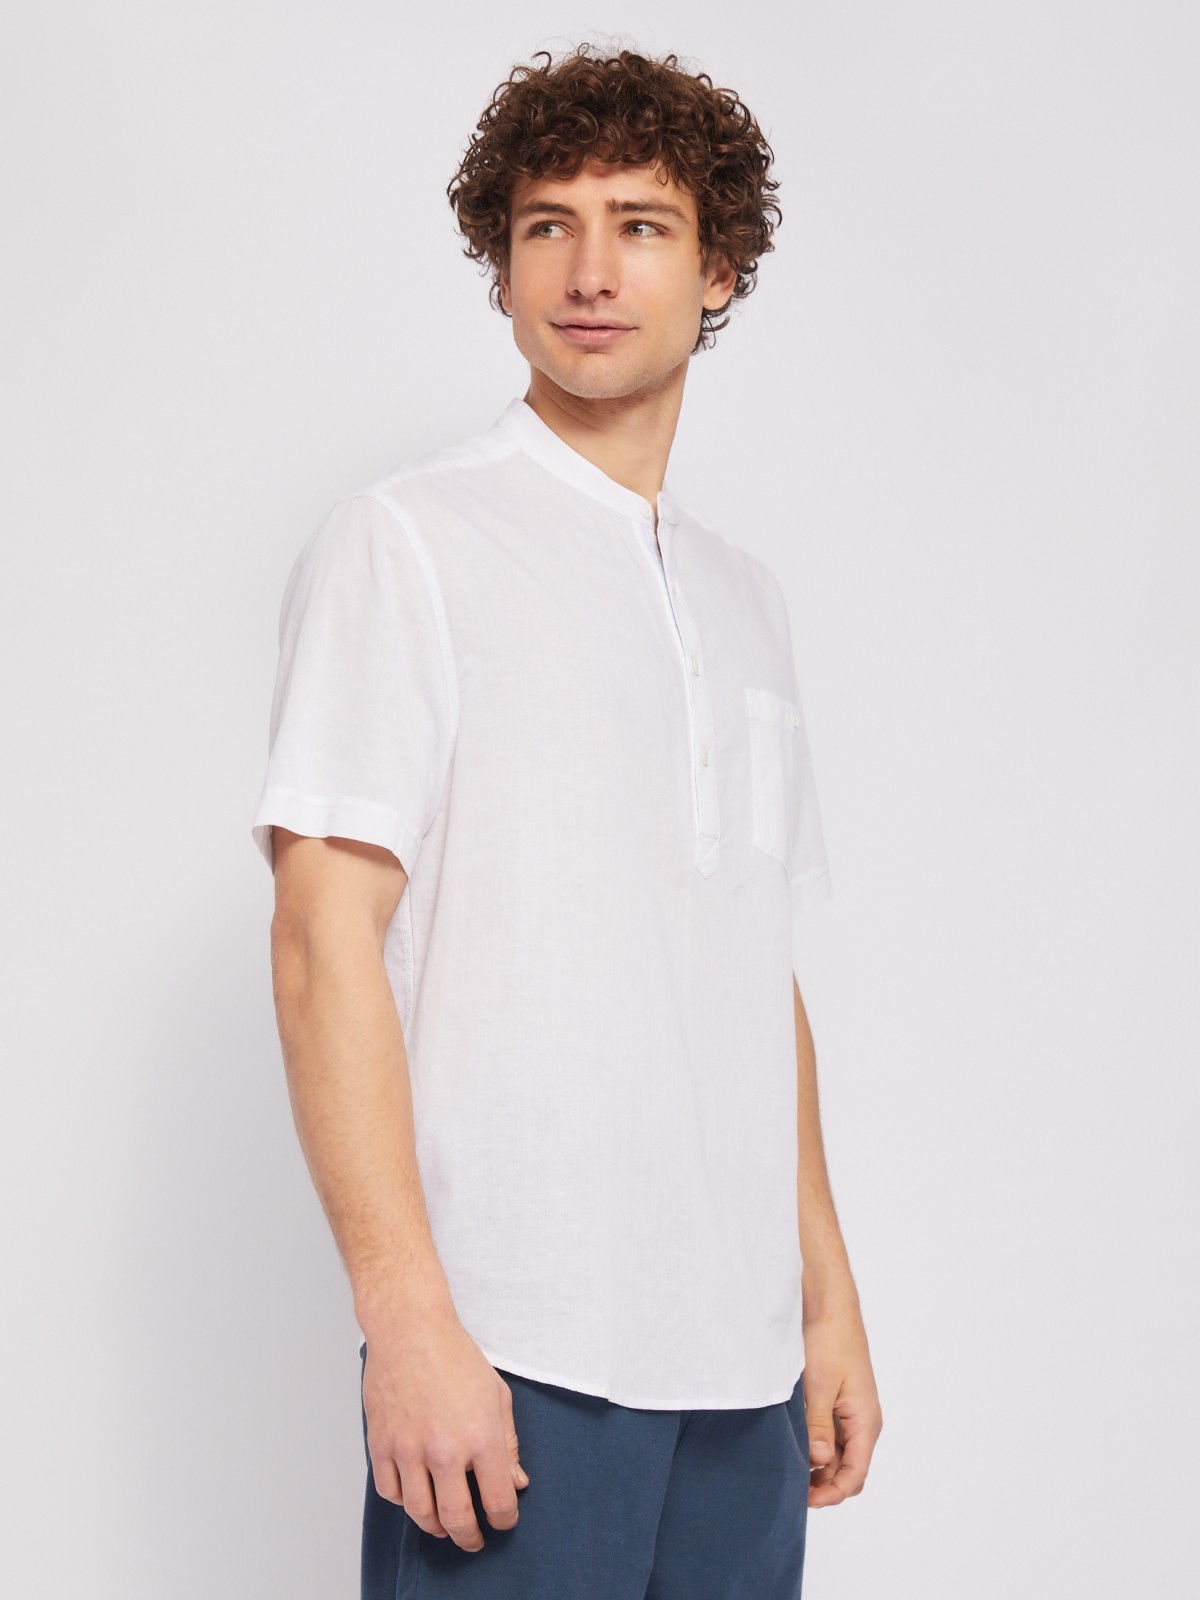 Льняная рубашка с коротким рукавом zolla 014242262013, цвет белый, размер M - фото 5